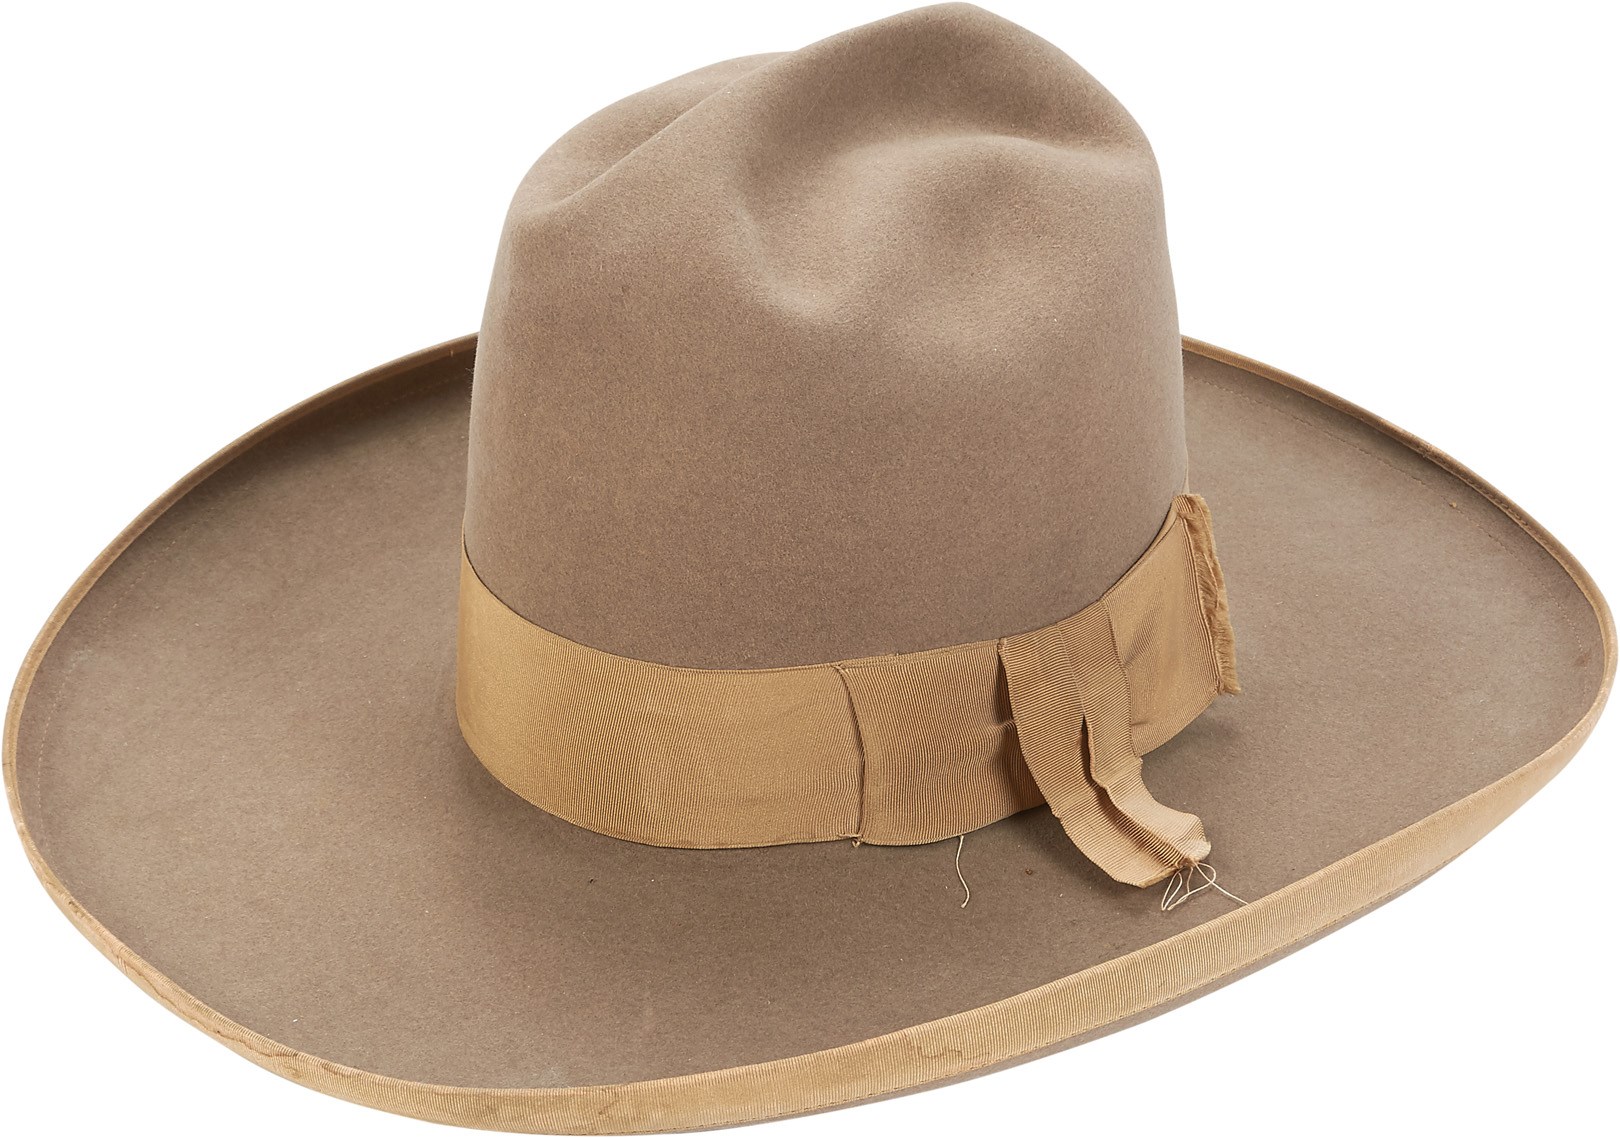 Buck Jones Screen Worn Cowboy Hat